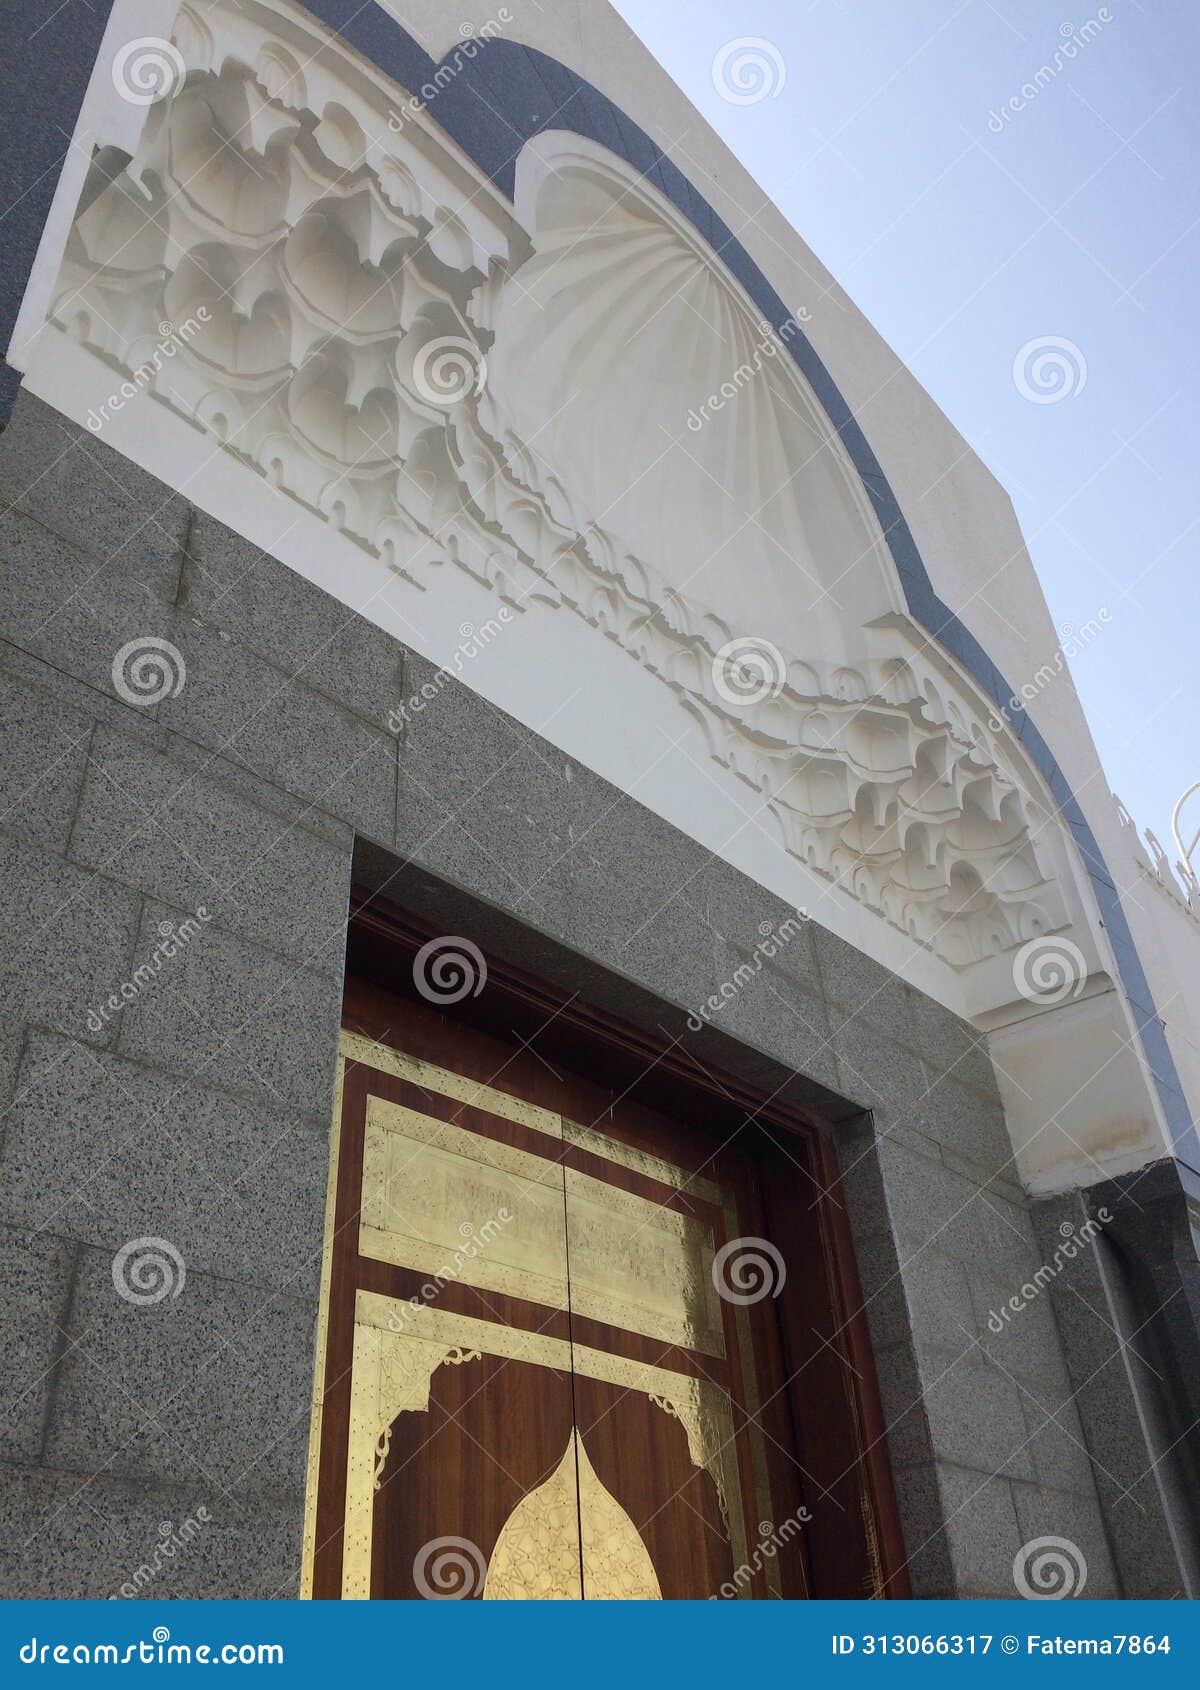 entrance gate of quba mosque in medina - islamic sacred city of al madinah - religious tour